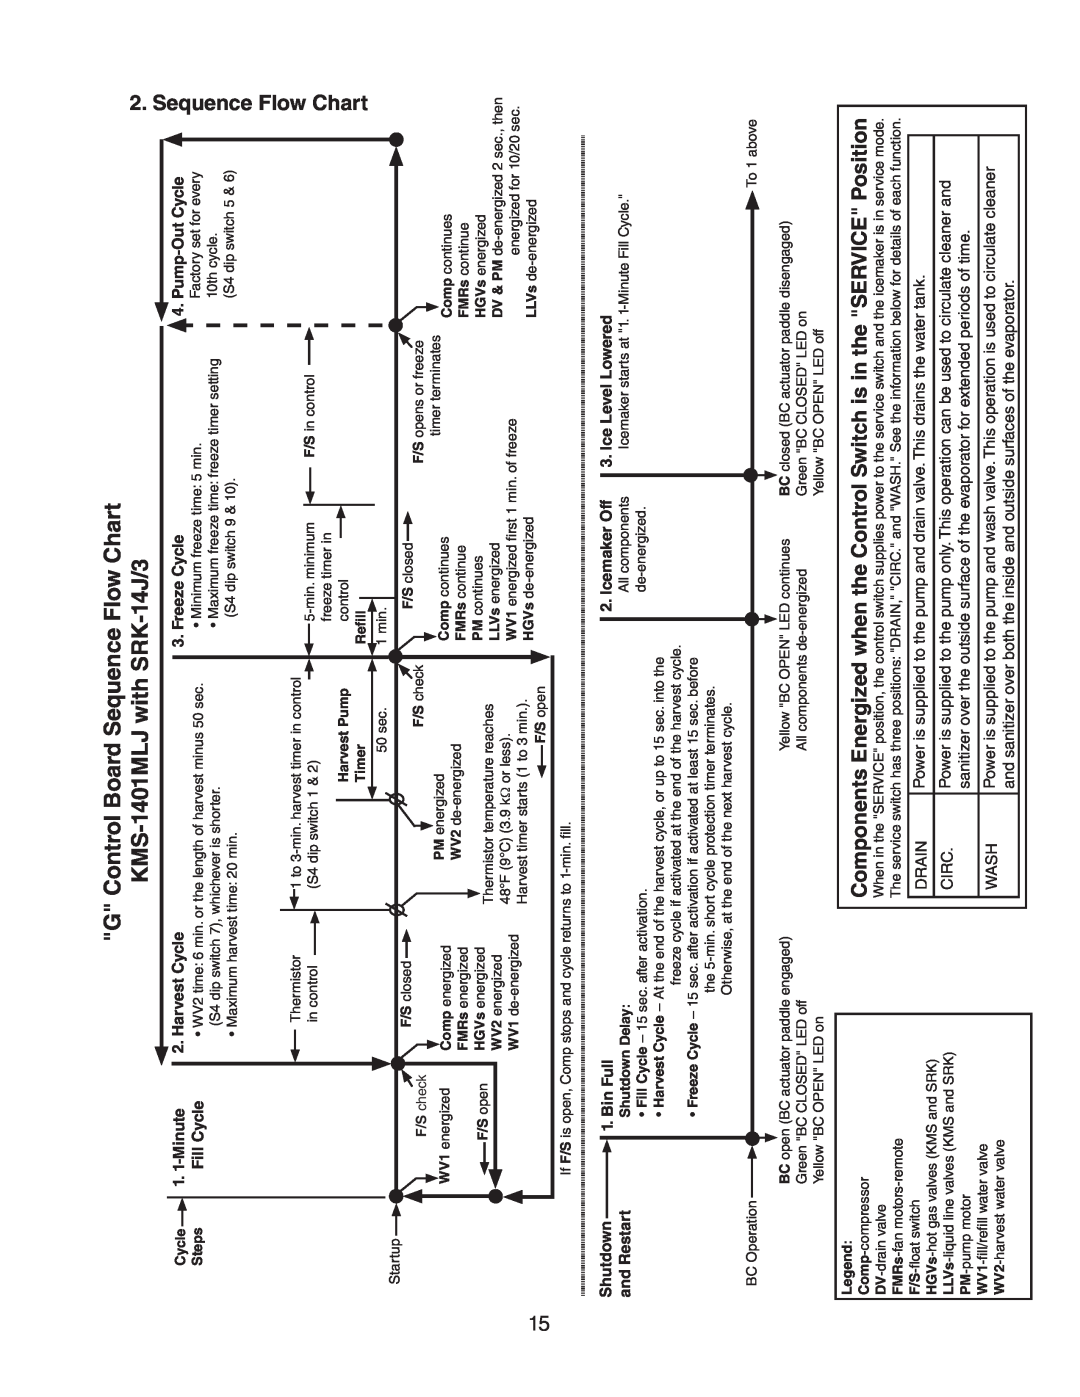 Hoshizaki Condensing Unit Models SRK-14J/3 G Control Board Sequence Flow Chart, KMS-1401MLJ with SRK-14J/3 